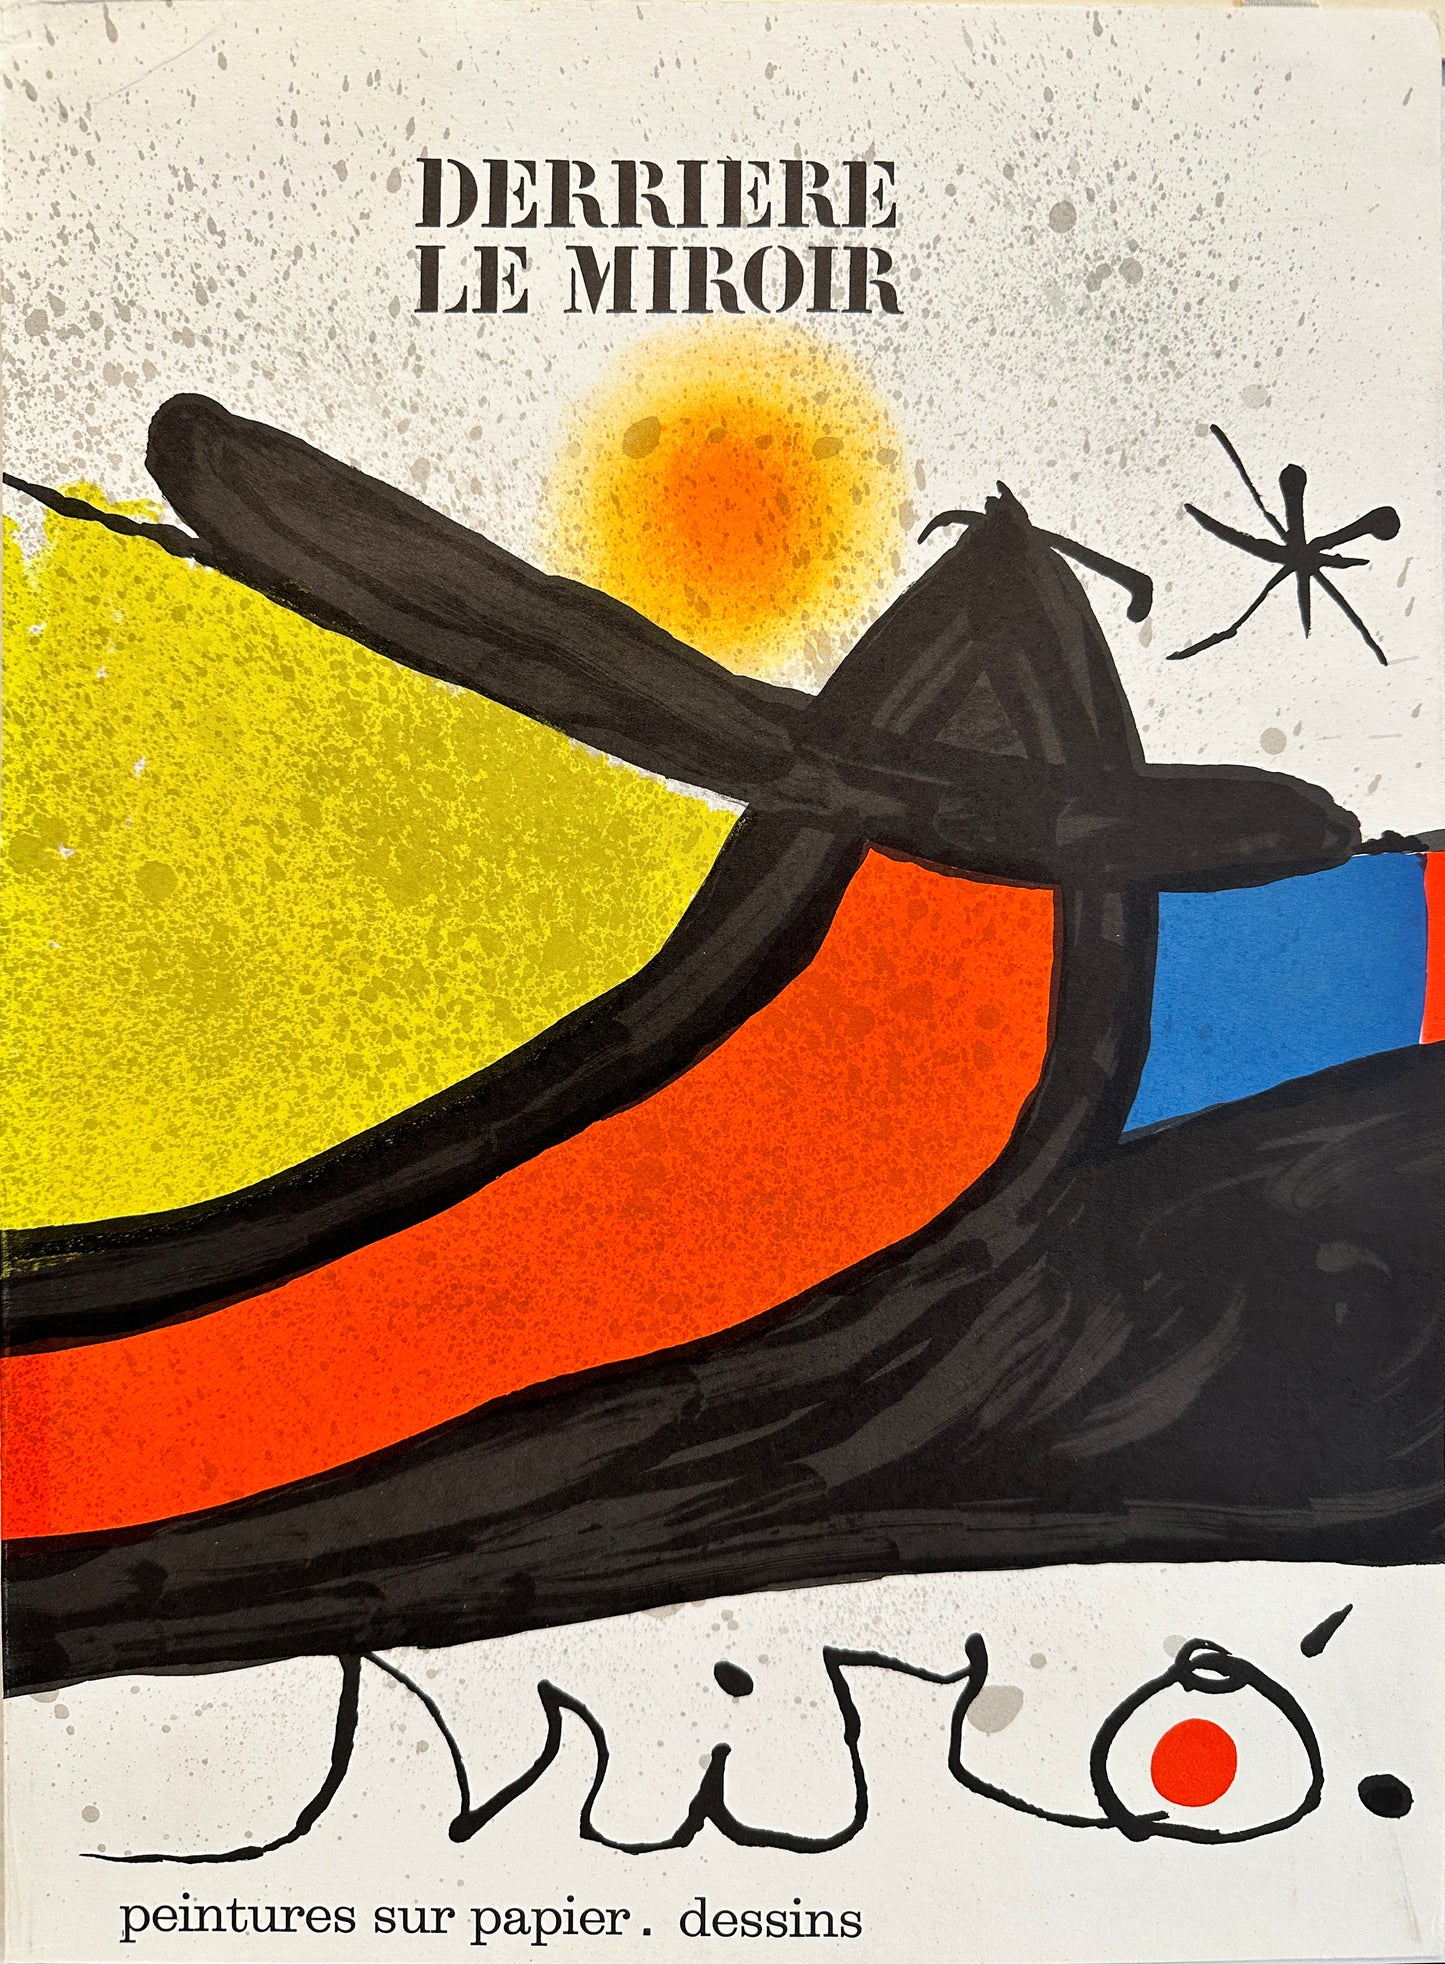 Joan Miro Lithograph: Derriere Le Miroir 193-194, 1971